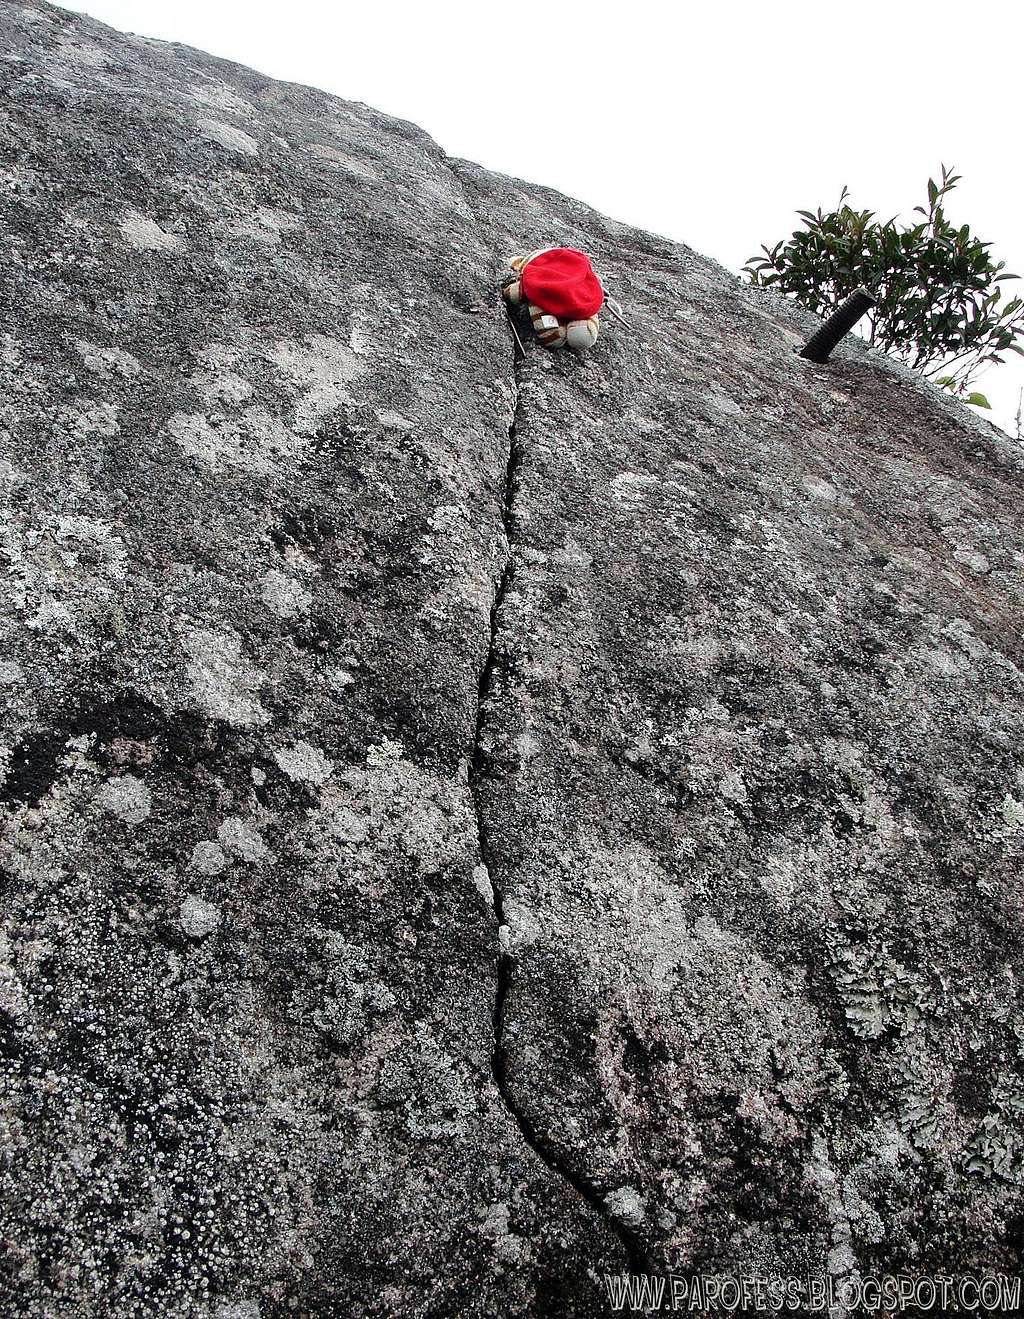 Parofito climbing a crack